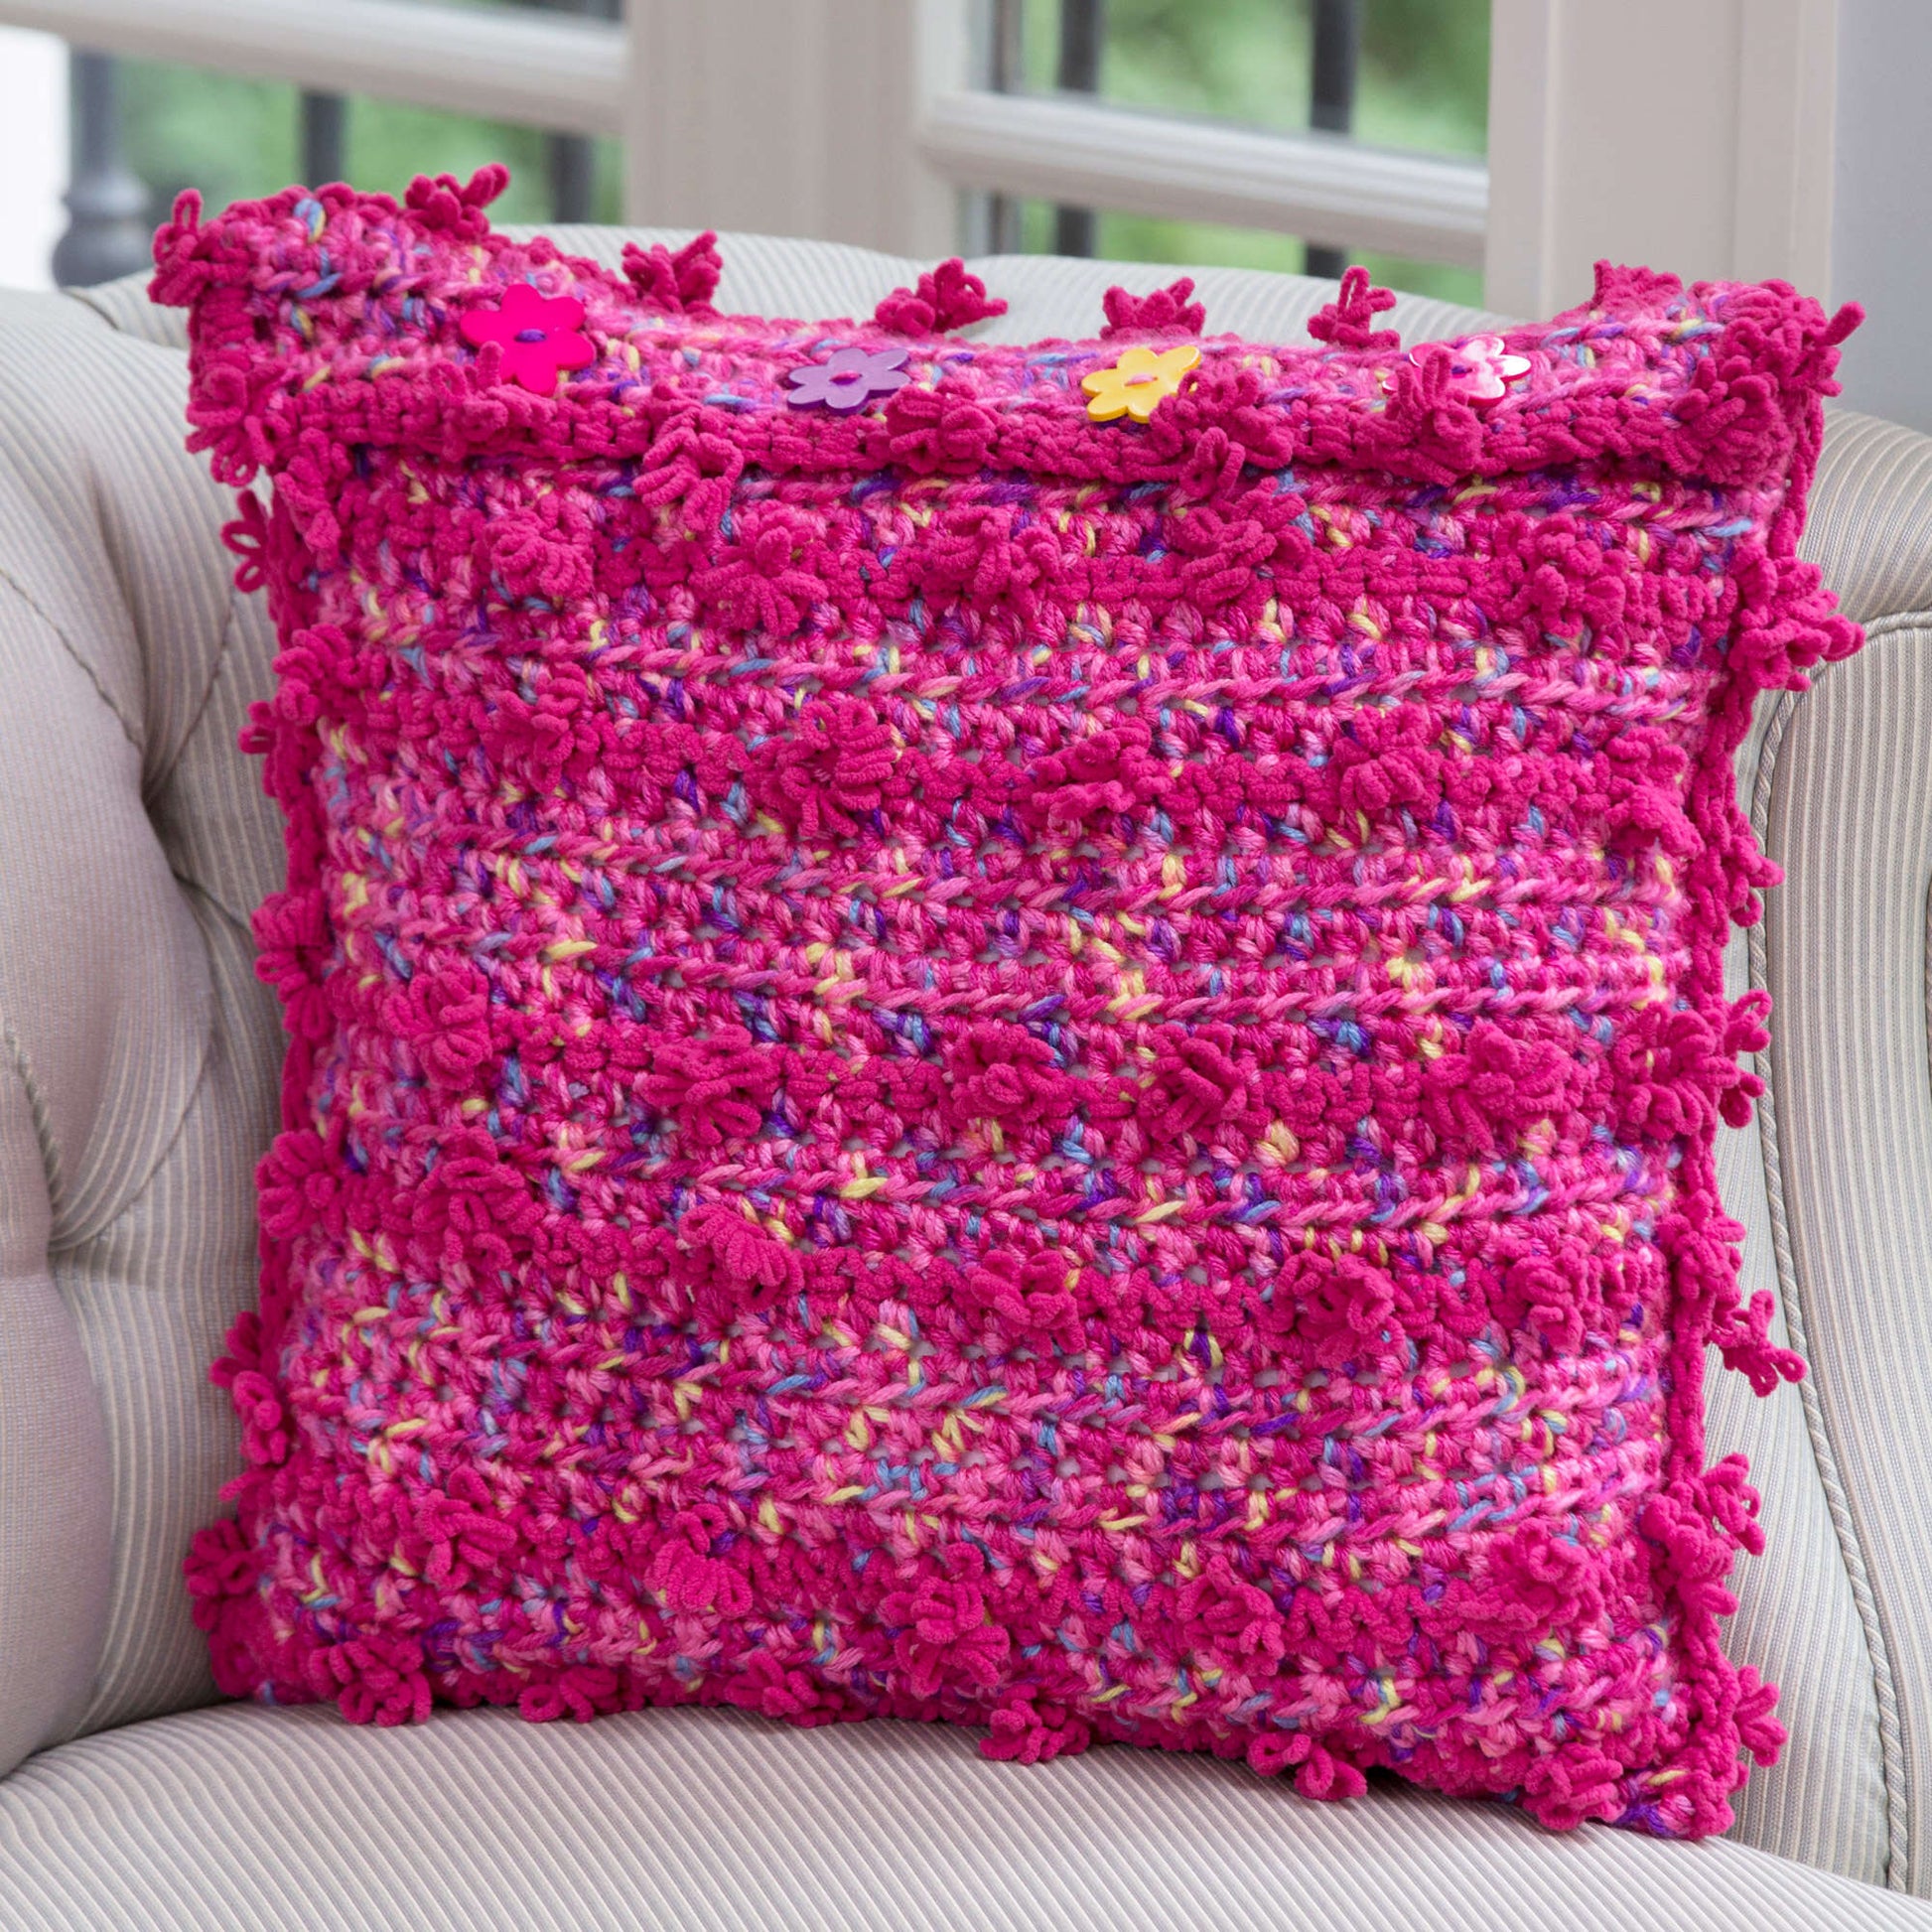 Free Red Heart Posh Pillow Crochet Pattern